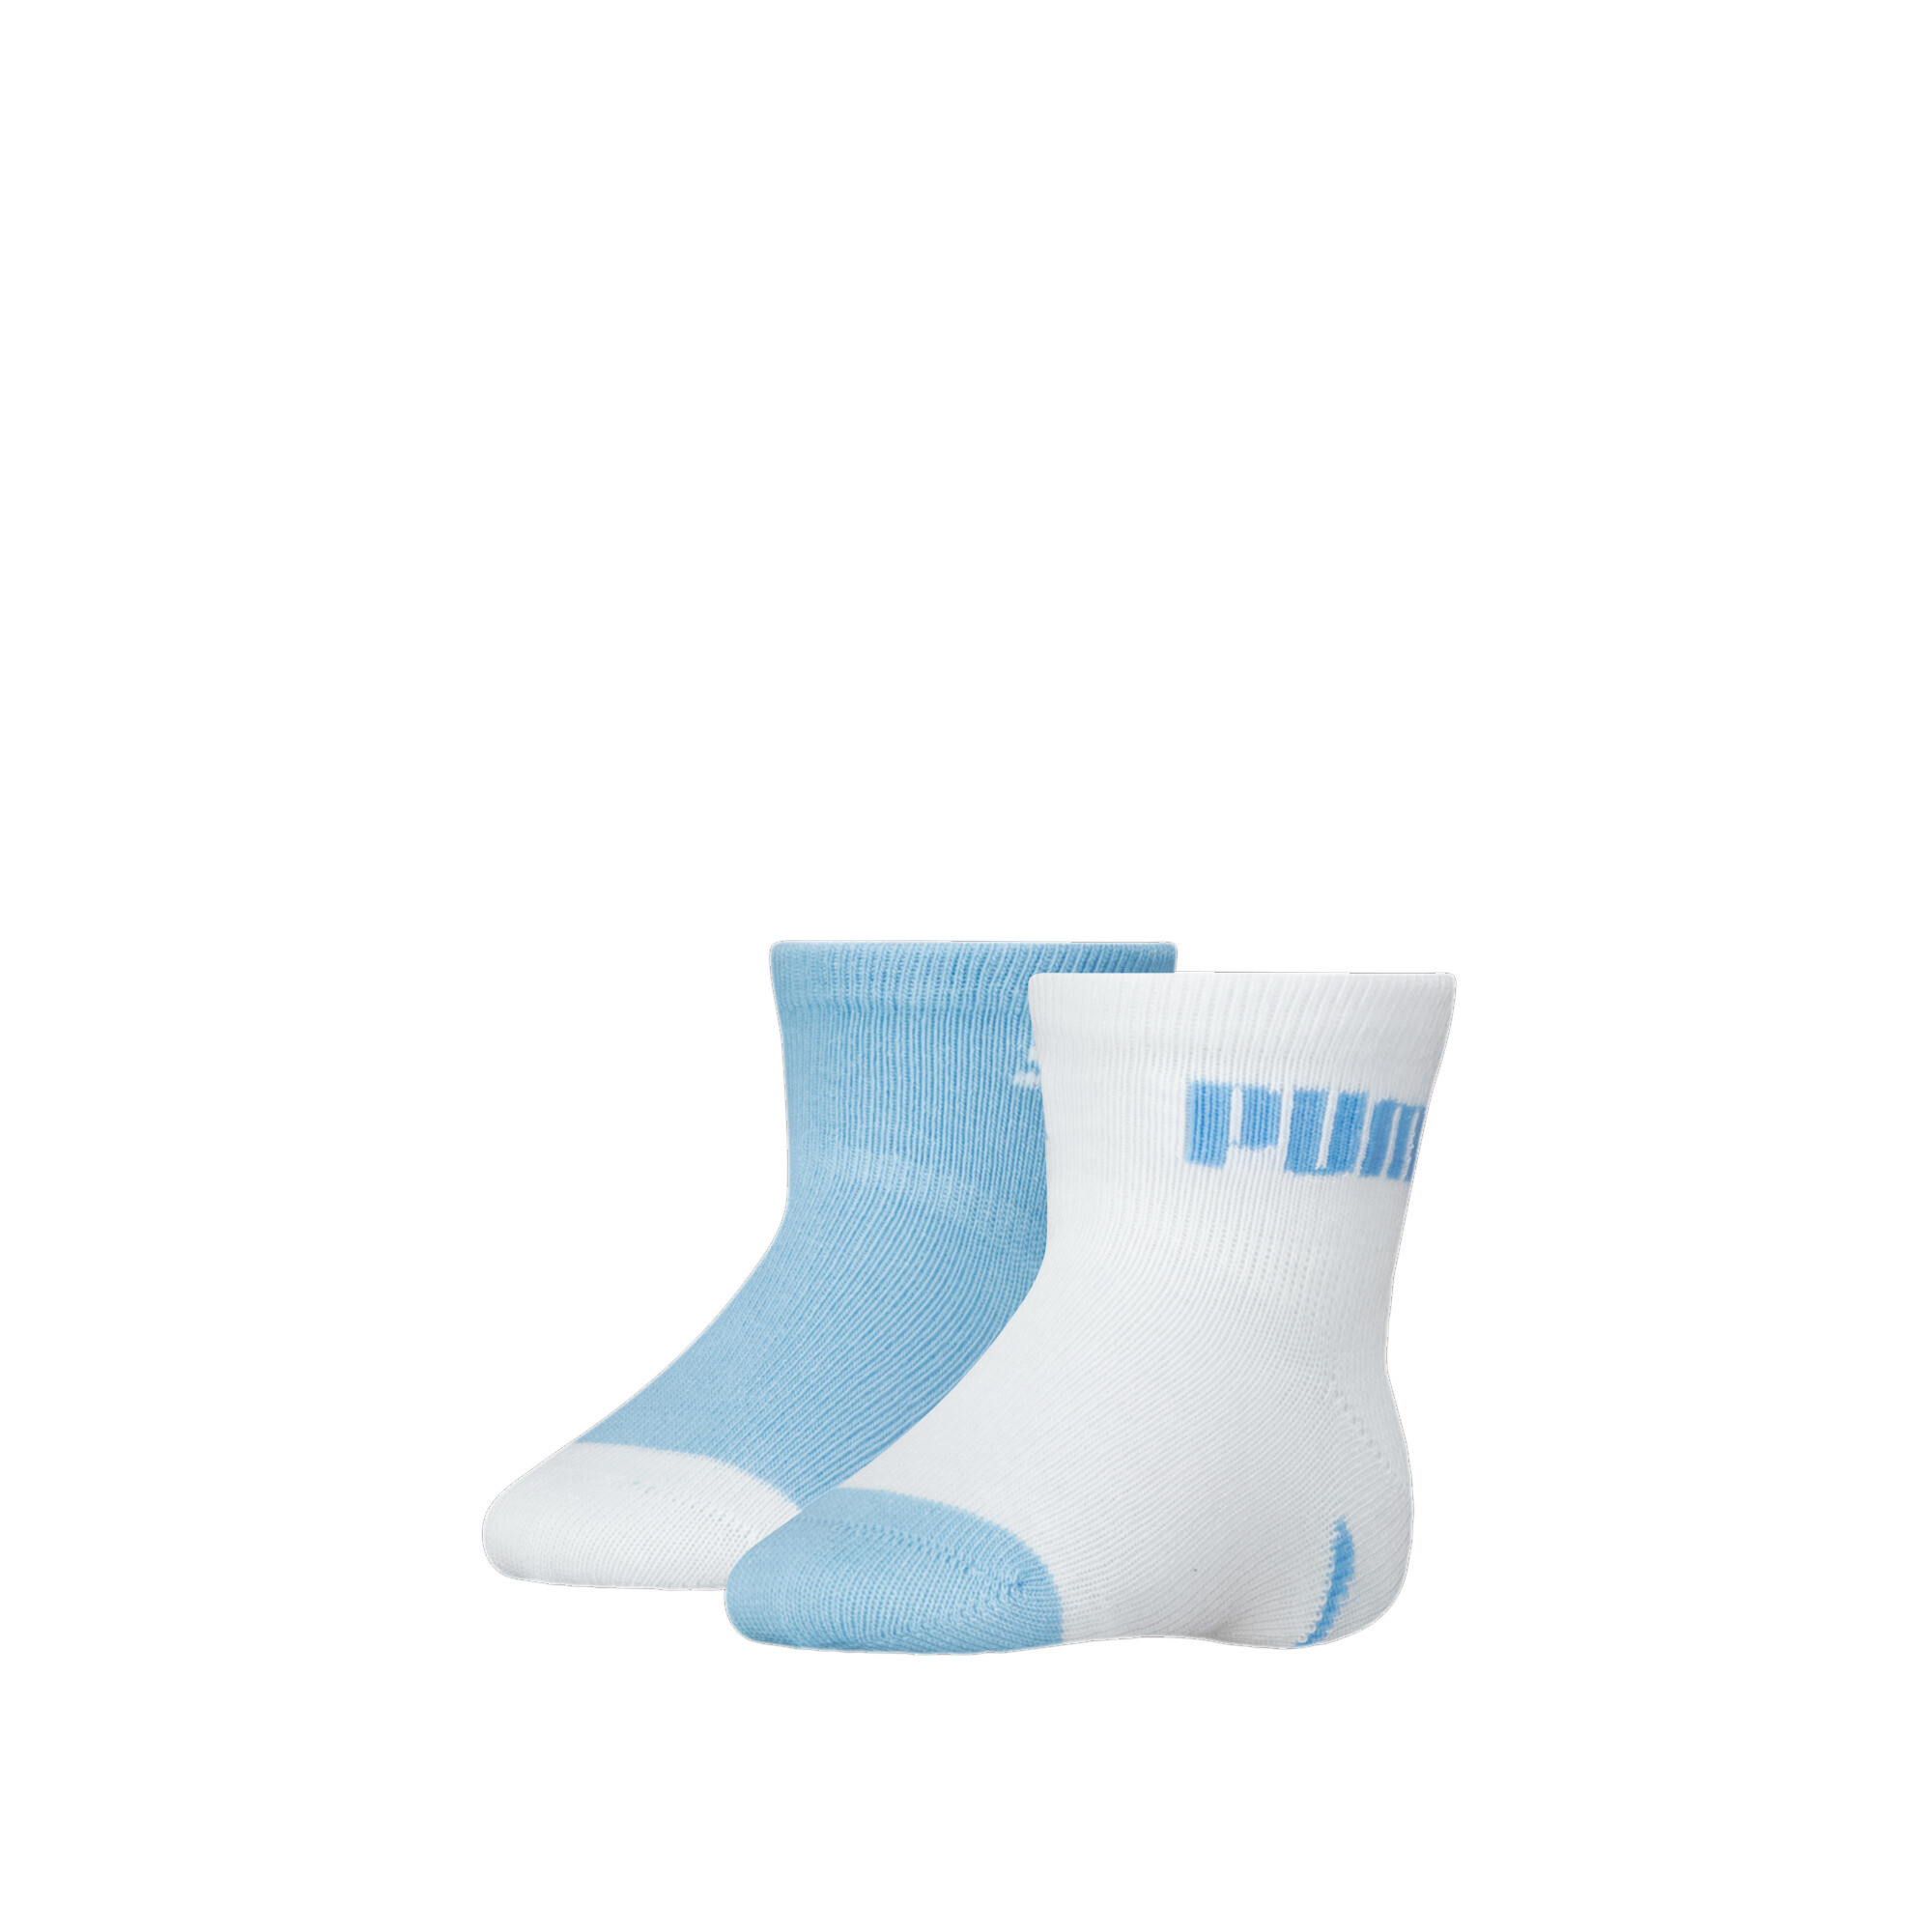 Puma Baby Classic Socks 2 Pack, Blue, Size 27-30, Age